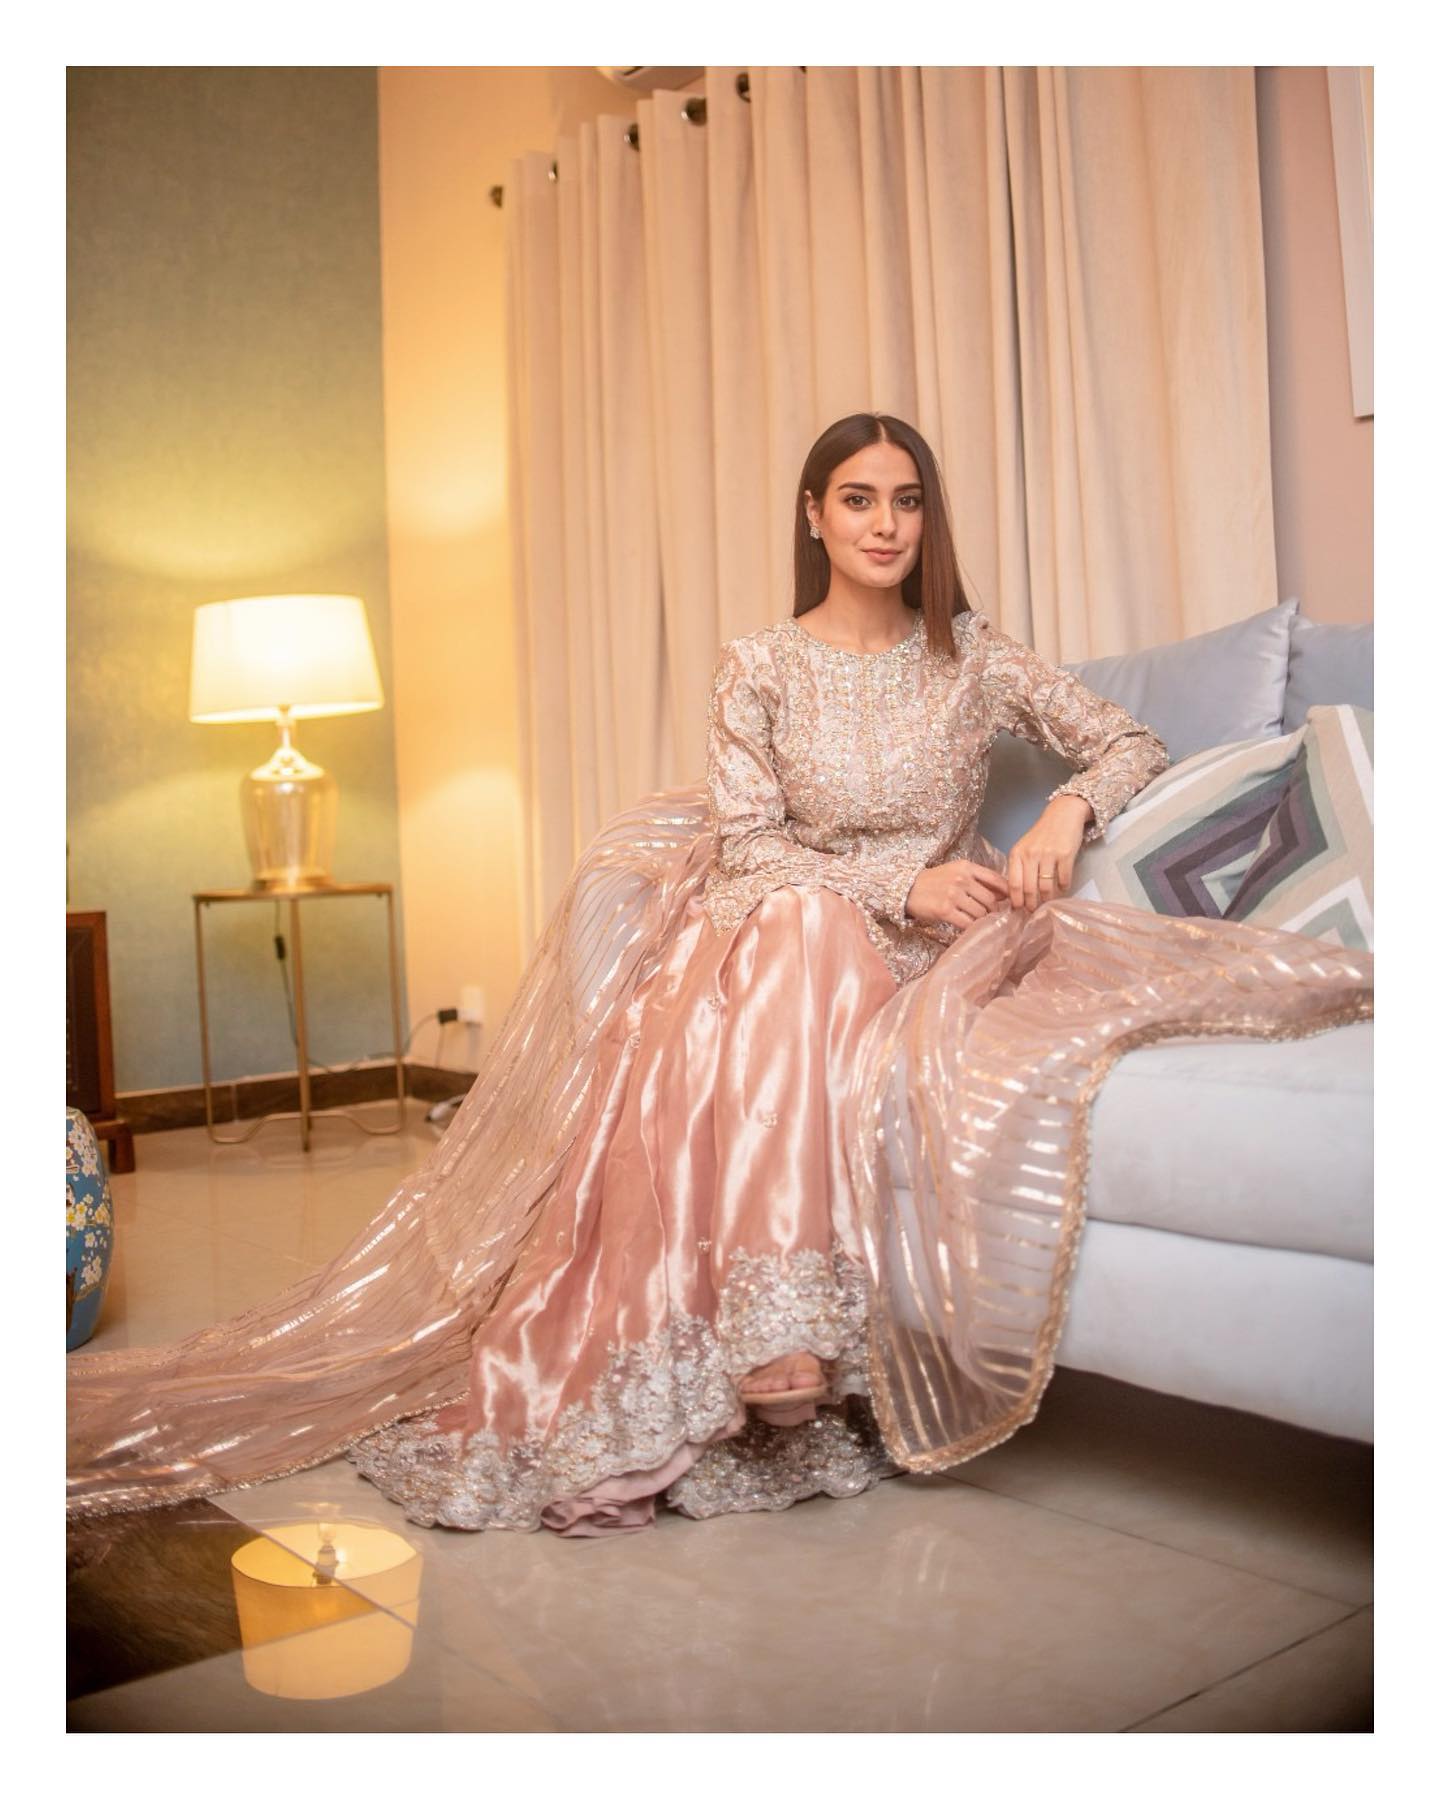 Iqra Aziz Outfits - 17 of Iqra Aziz's Best Dresses Ever